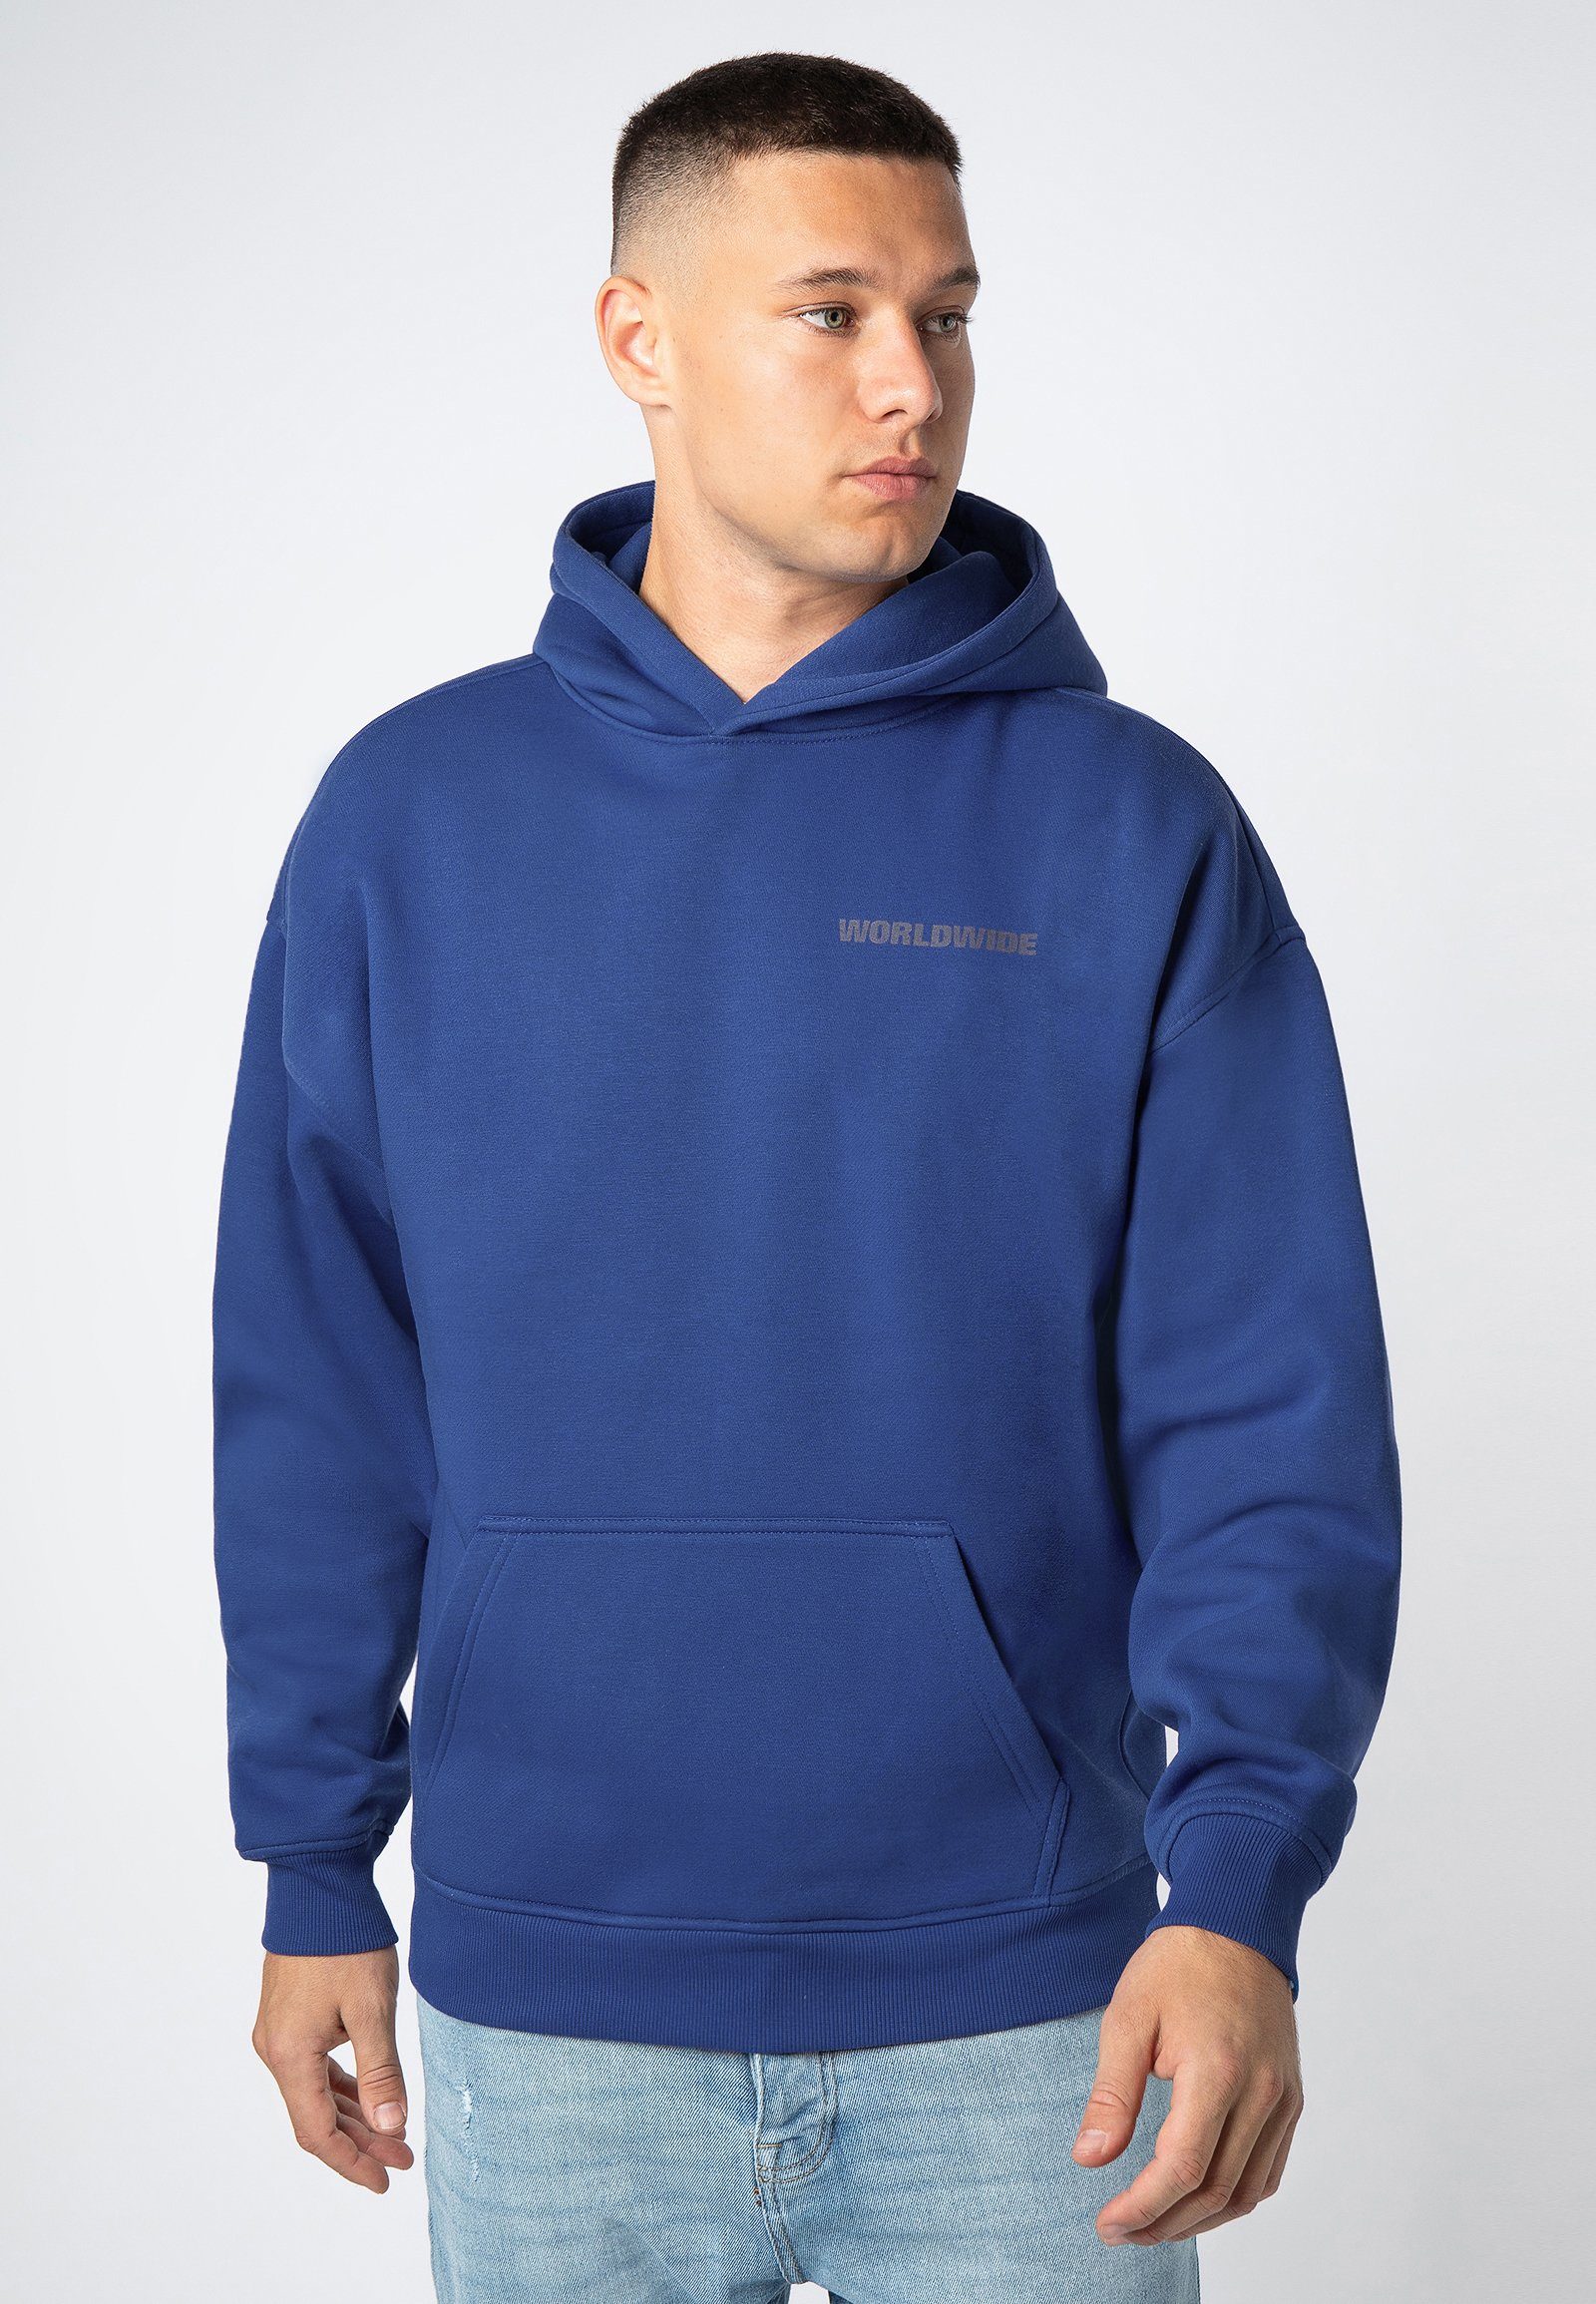 SUBLEVEL Hoodie Sweathoodie WORLDWIDE blue | Sweatshirts